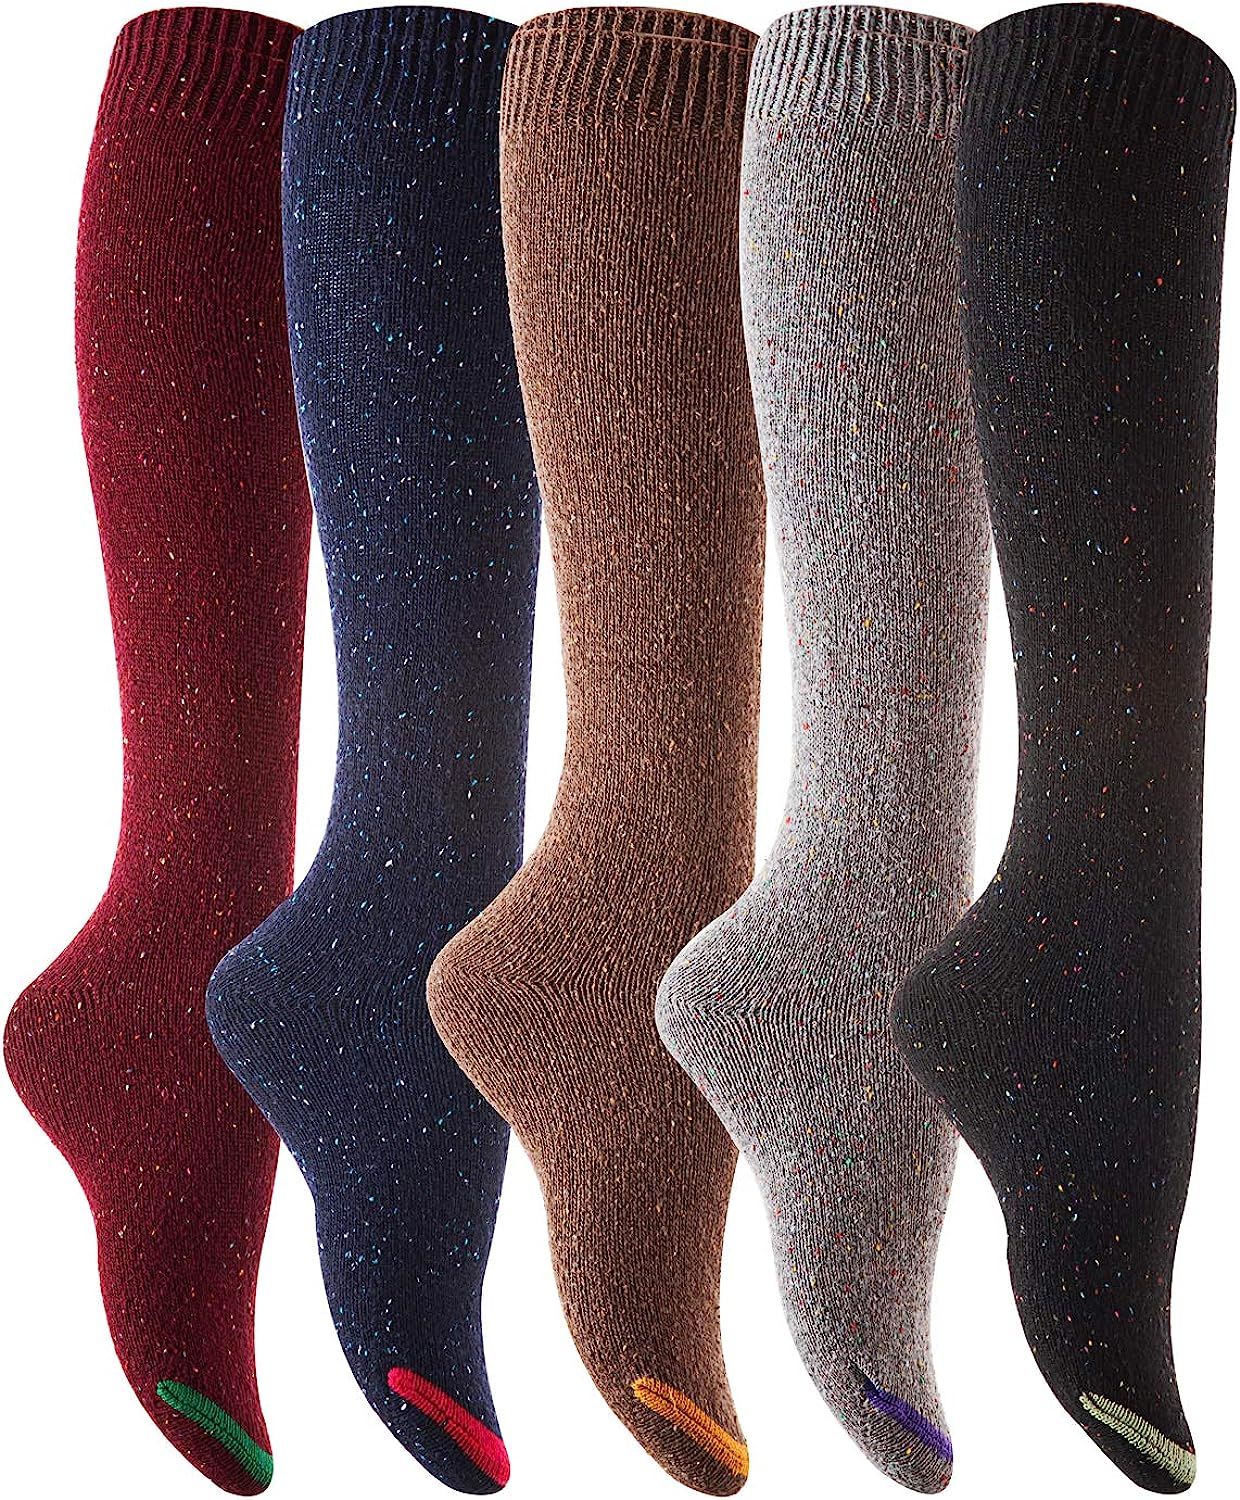 Lian LifeStyle Women's 5 Pairs Cute Knee High Cotton Socks Size 6-9 L158212-5p | Amazon (US)